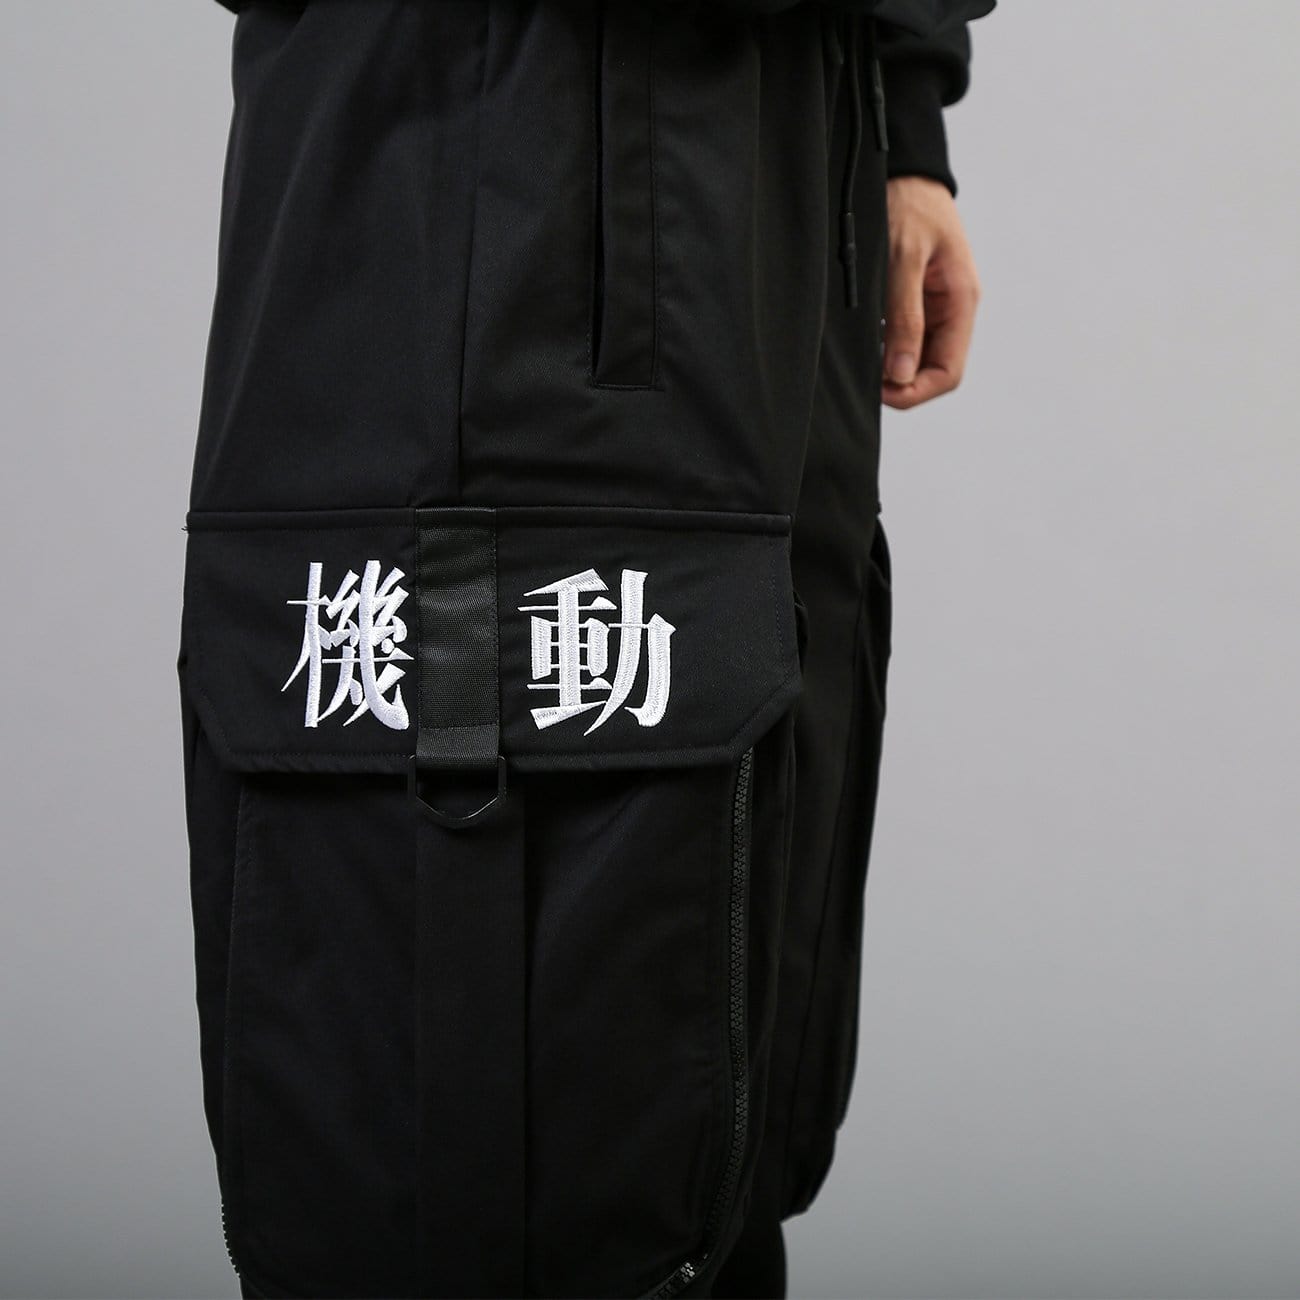 Dark Functional Big Pockets Cargo Pants Streetwear Brand Techwear Combat Tactical YUGEN THEORY